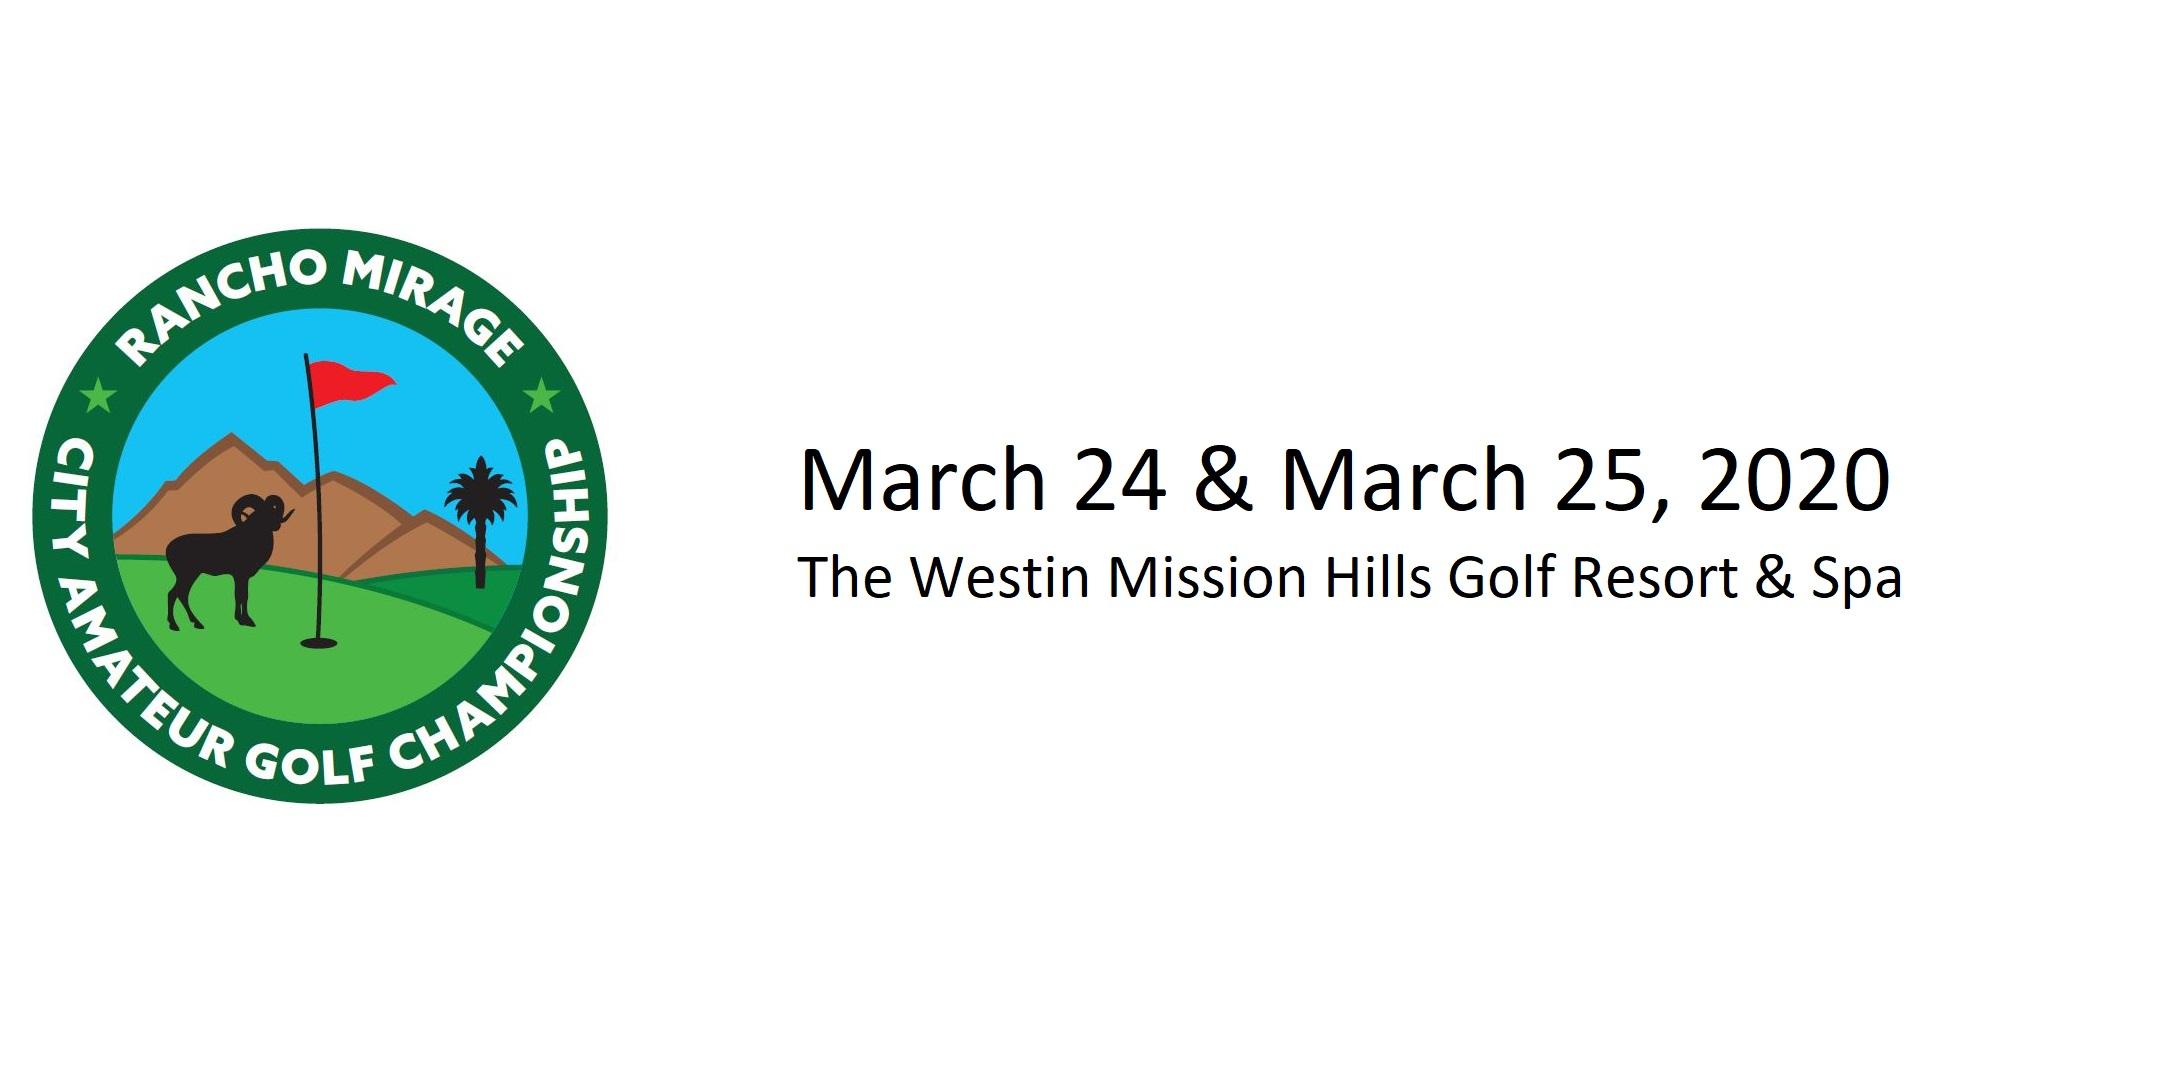 Rancho Mirage City Amateur Golf Championship